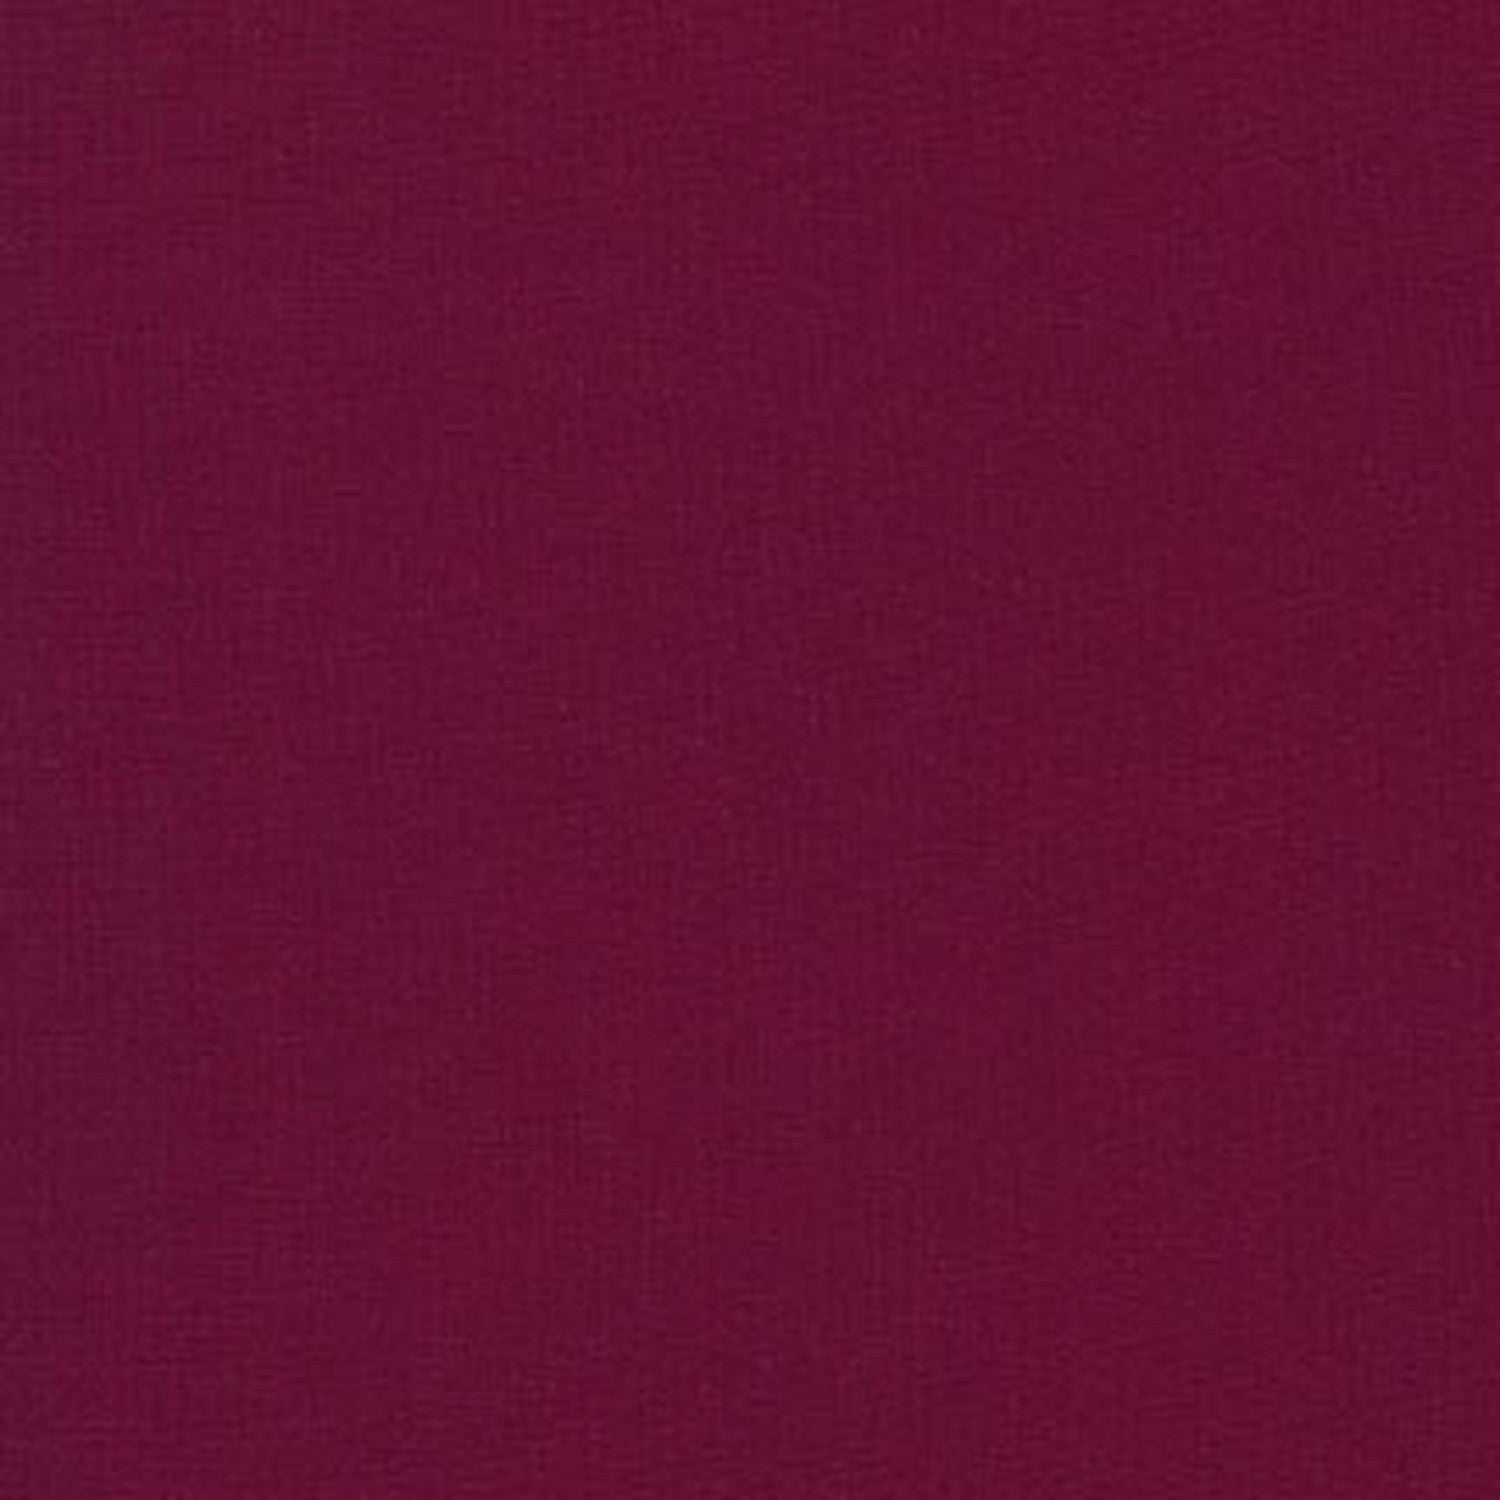 Kona Cotton Solids Bordeaux fabric thumbnail for true color reference